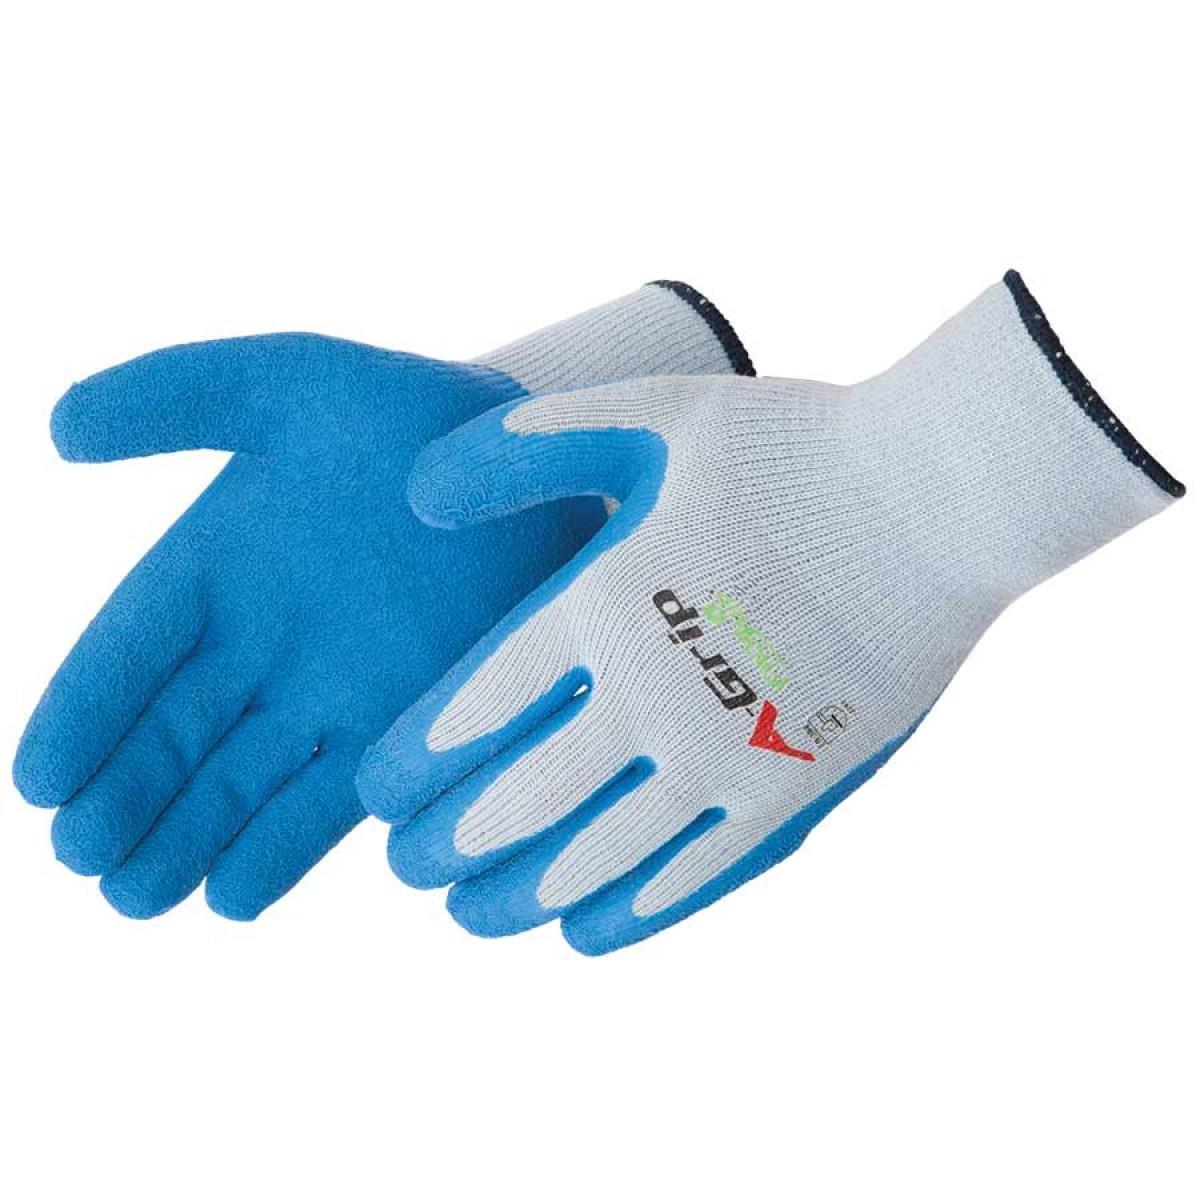 A-GRIP BLUE LATEX PALM COATED - Latex Coated Gloves